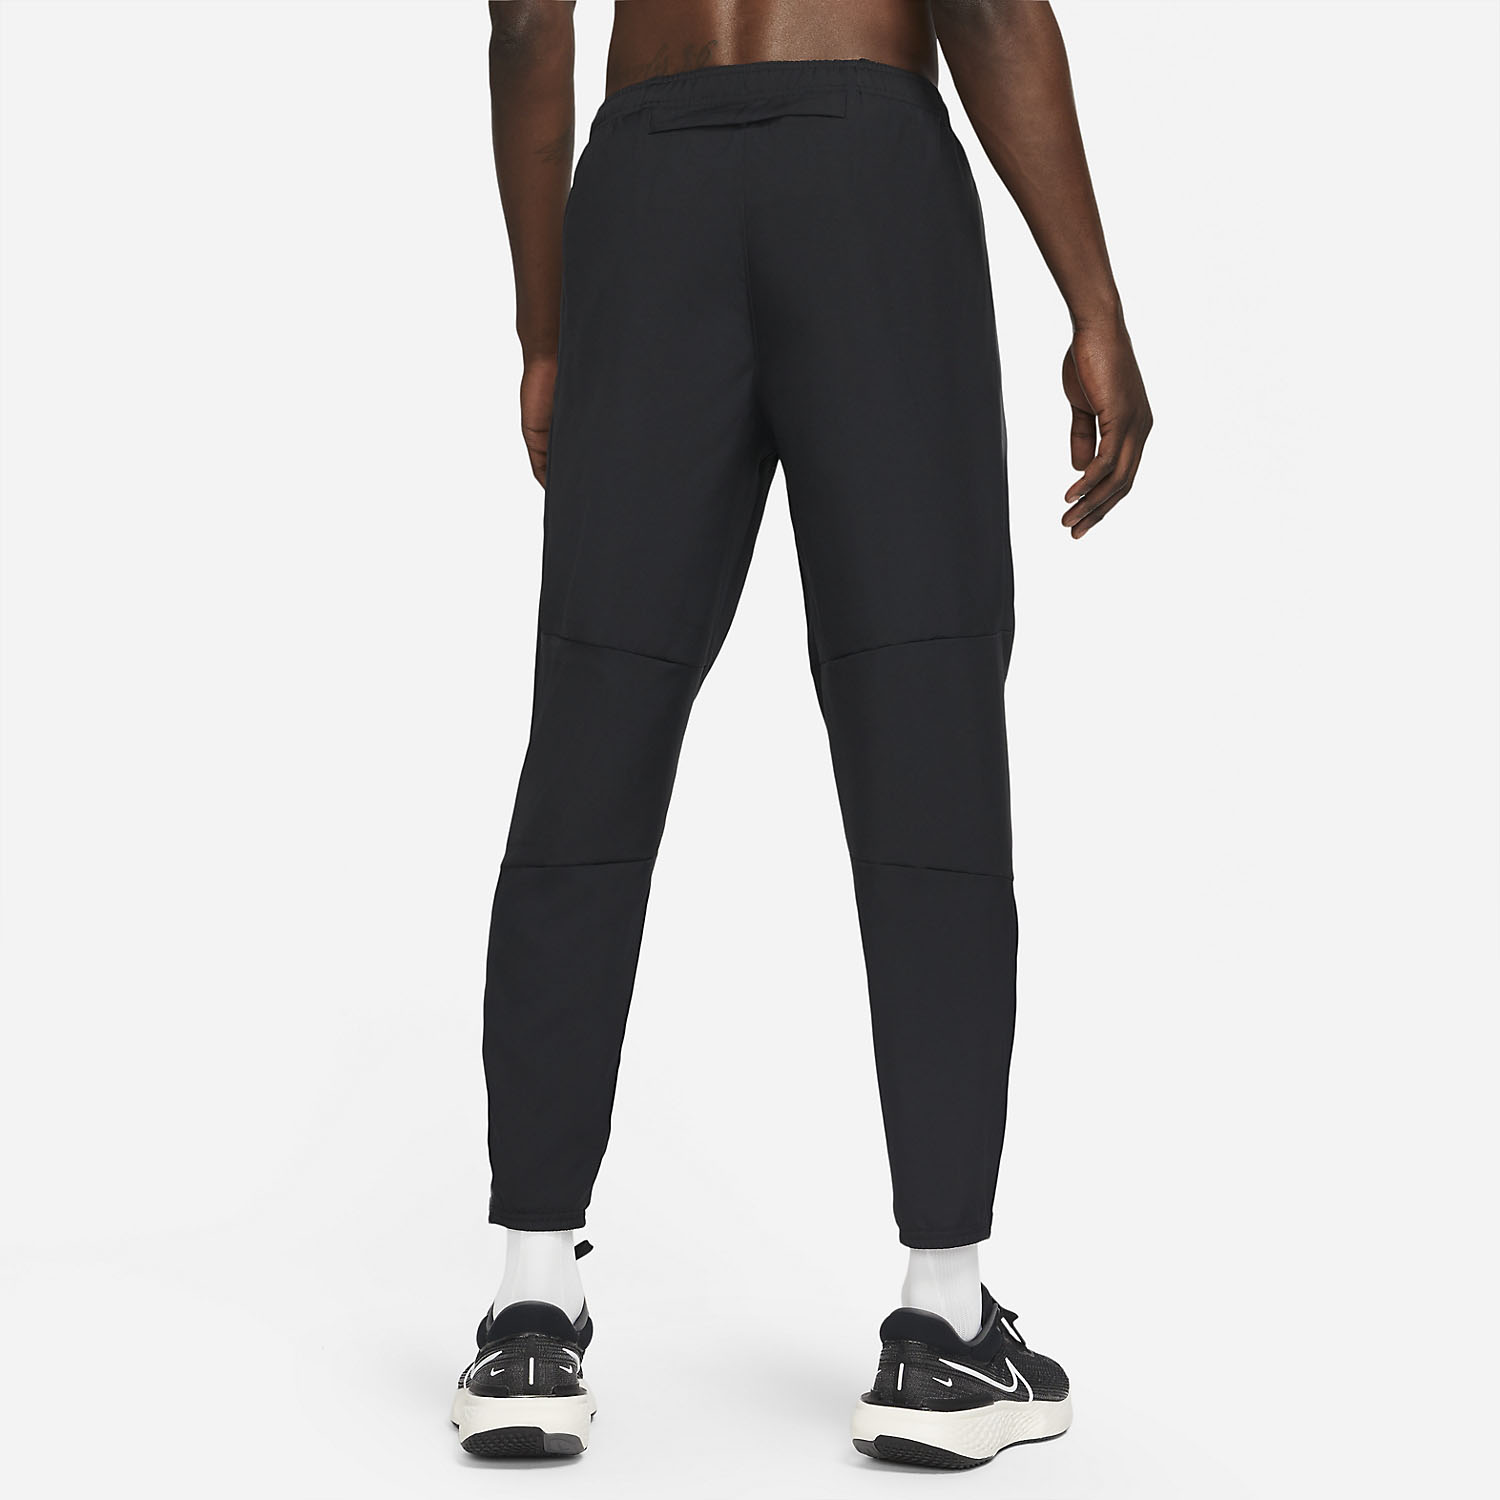 Nike Dri-FIT Challenger Men's Running Pants - Black